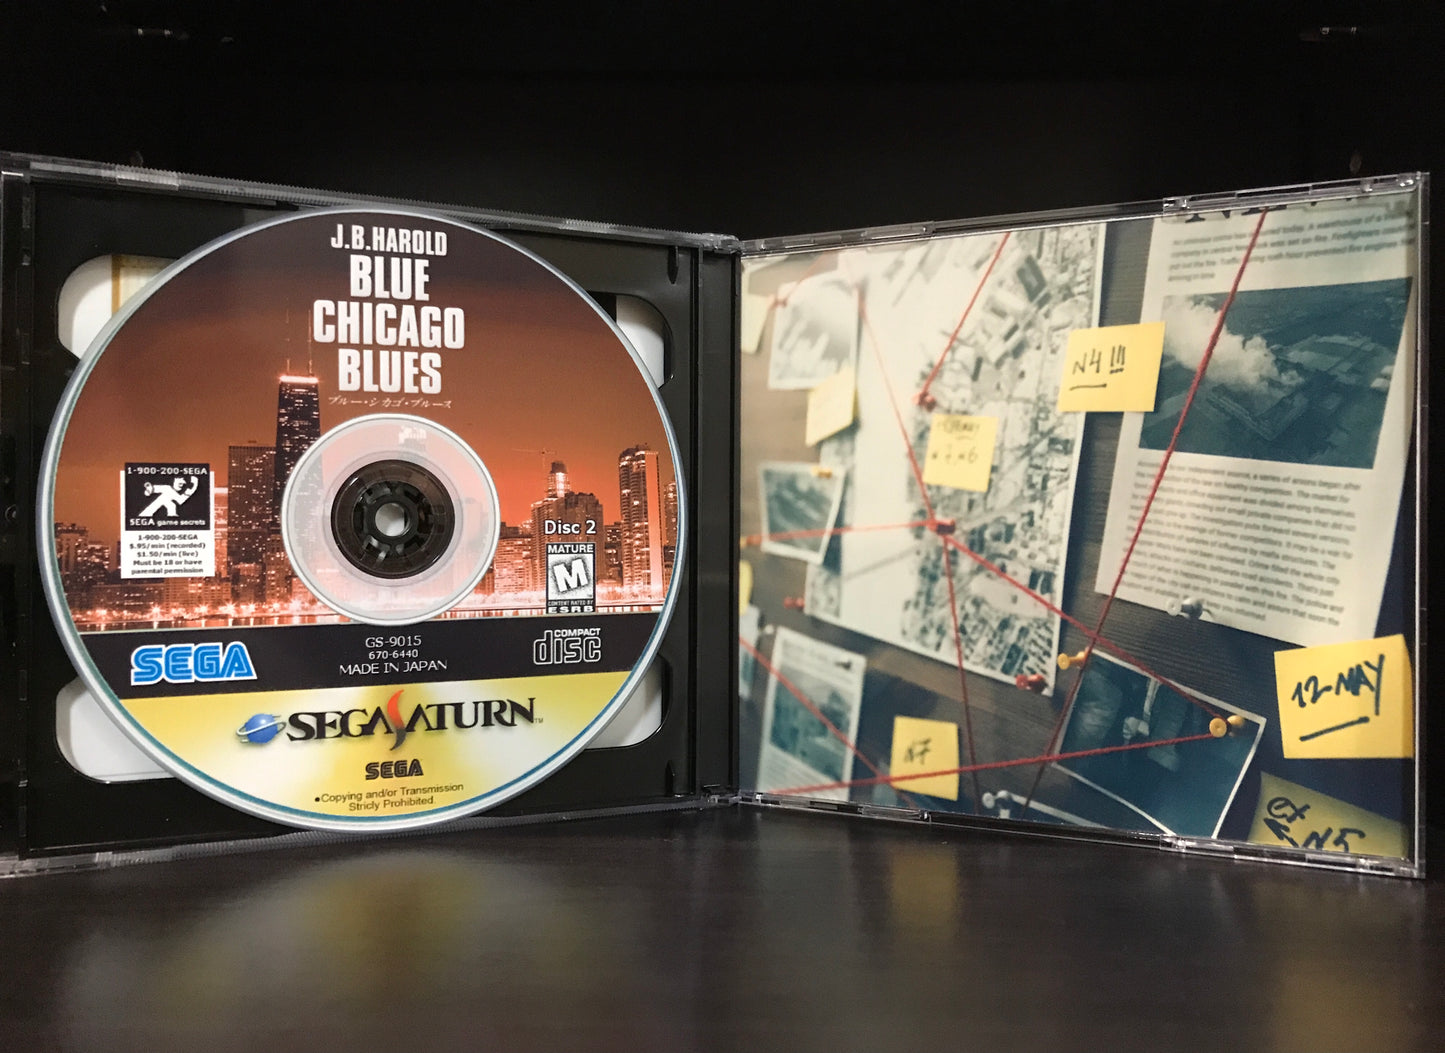 J.B. Harold Blue Chicago Blues (English Translation) [Sega Saturn] Reproduction